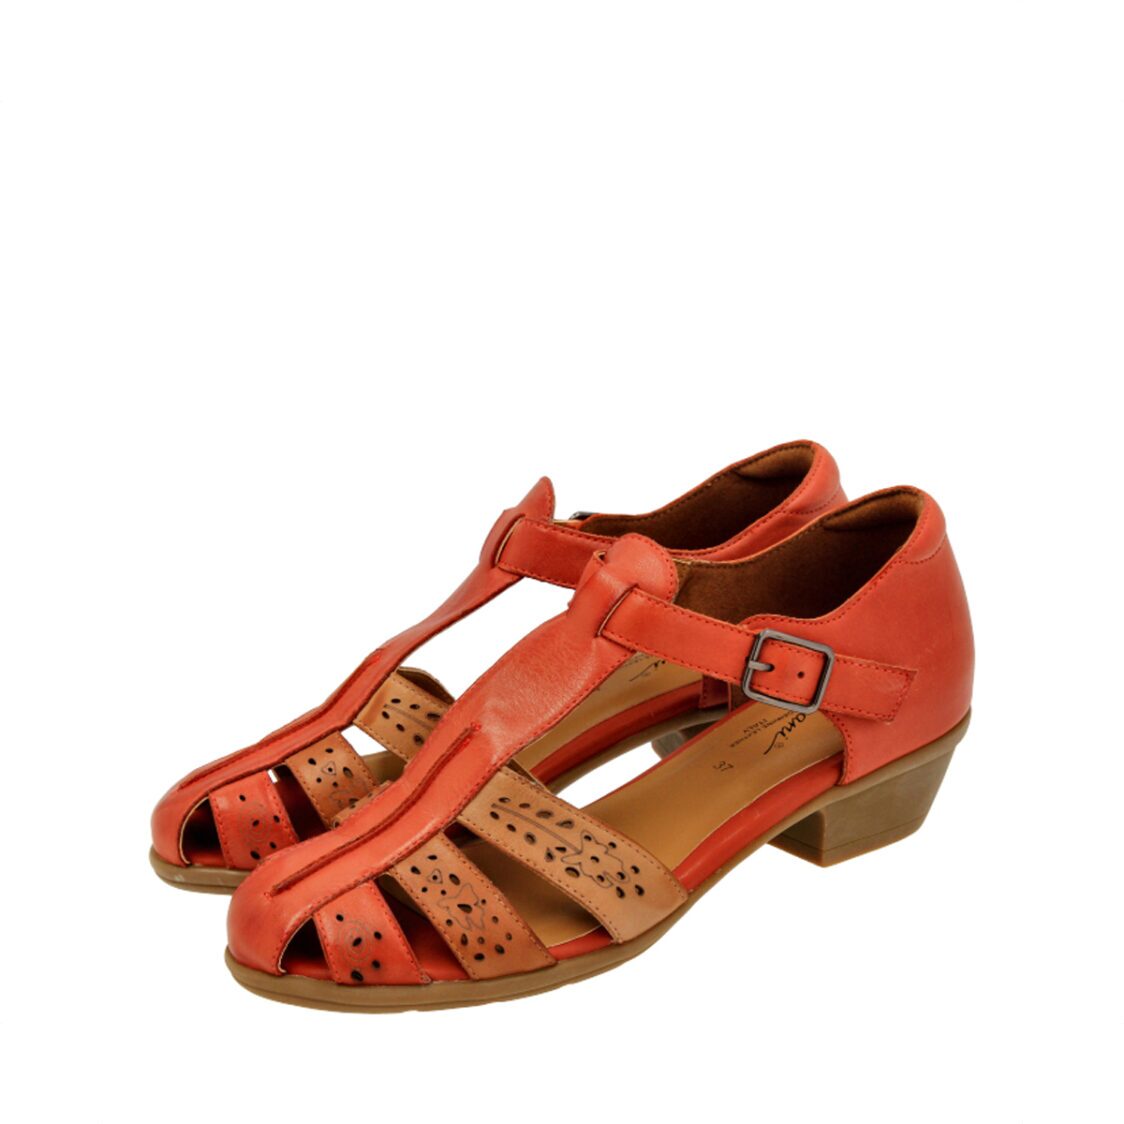 Barani 19606 Chestnut Leather Heeled Sandals Short